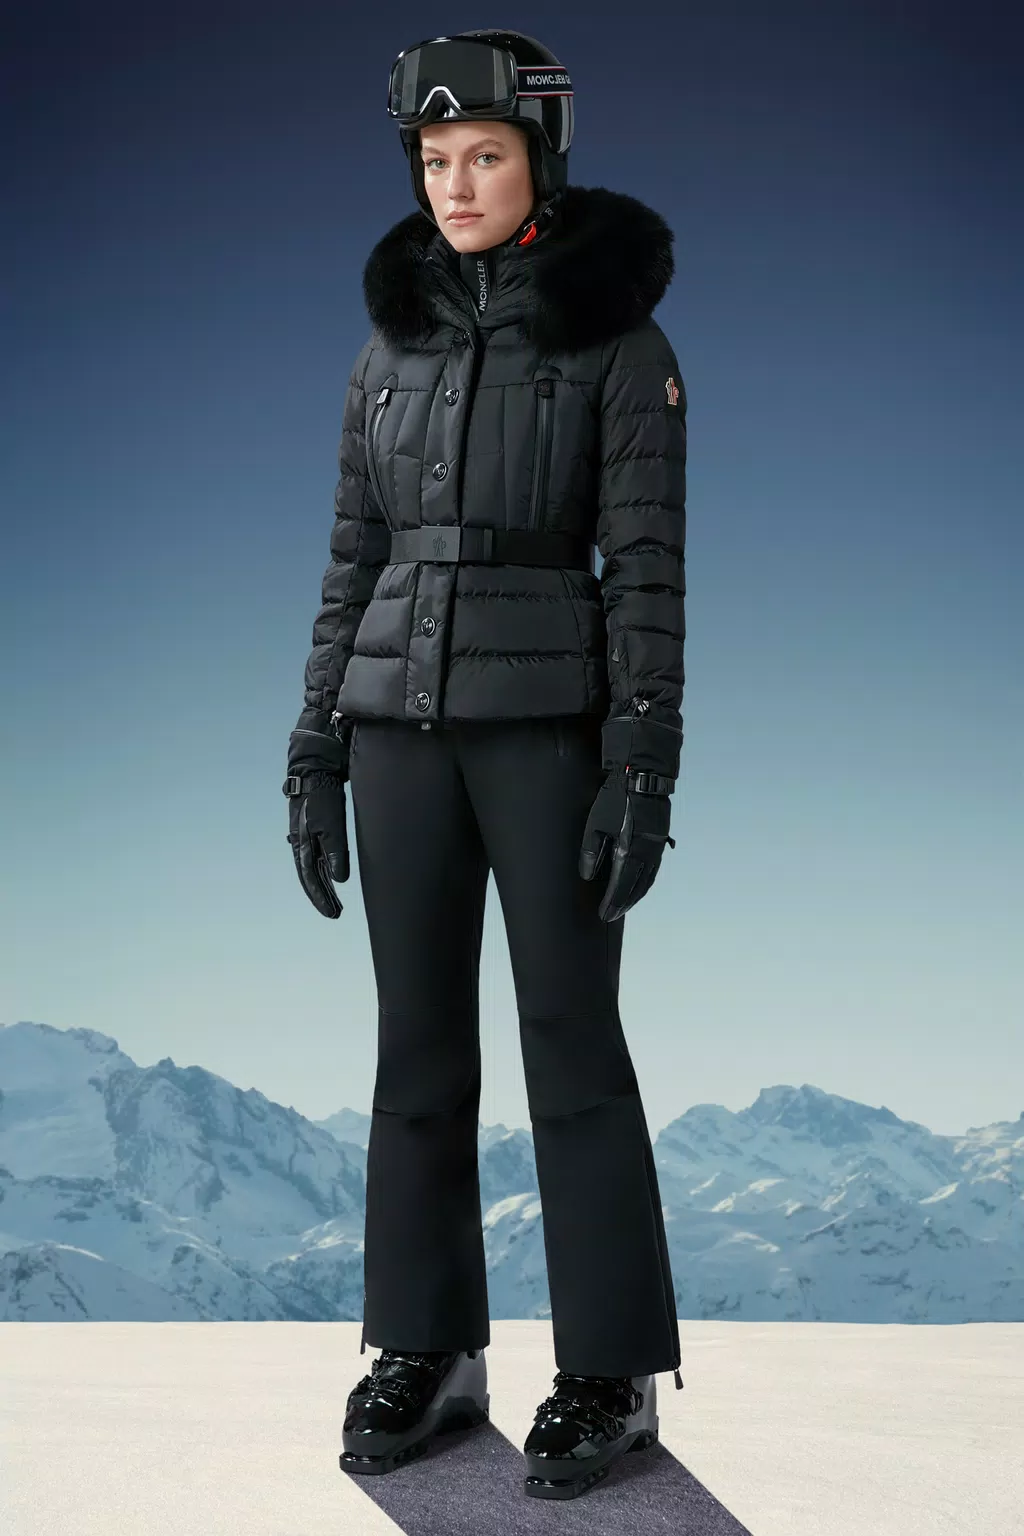 Black Suisses Short Down Jacket - Short Down Jackets for Women